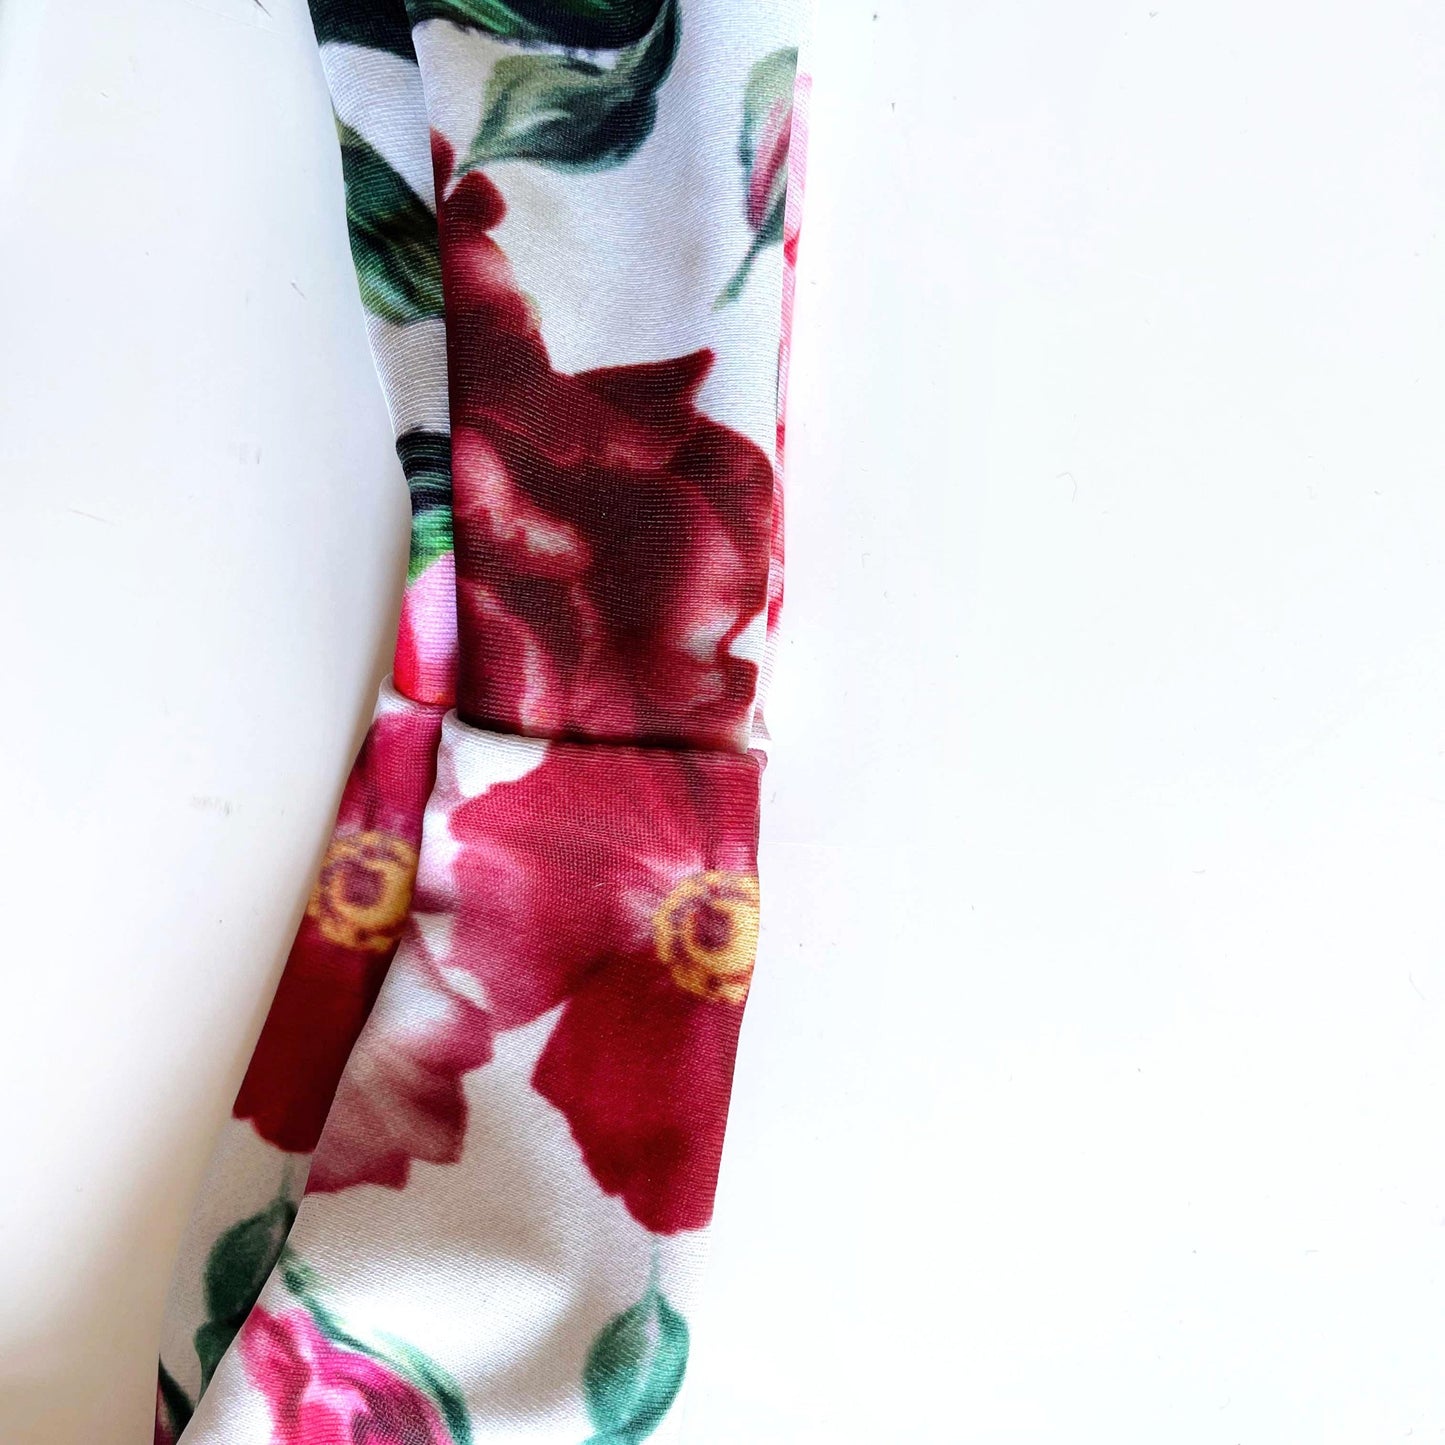 zaful floral ruched top thong bikini set - size medium